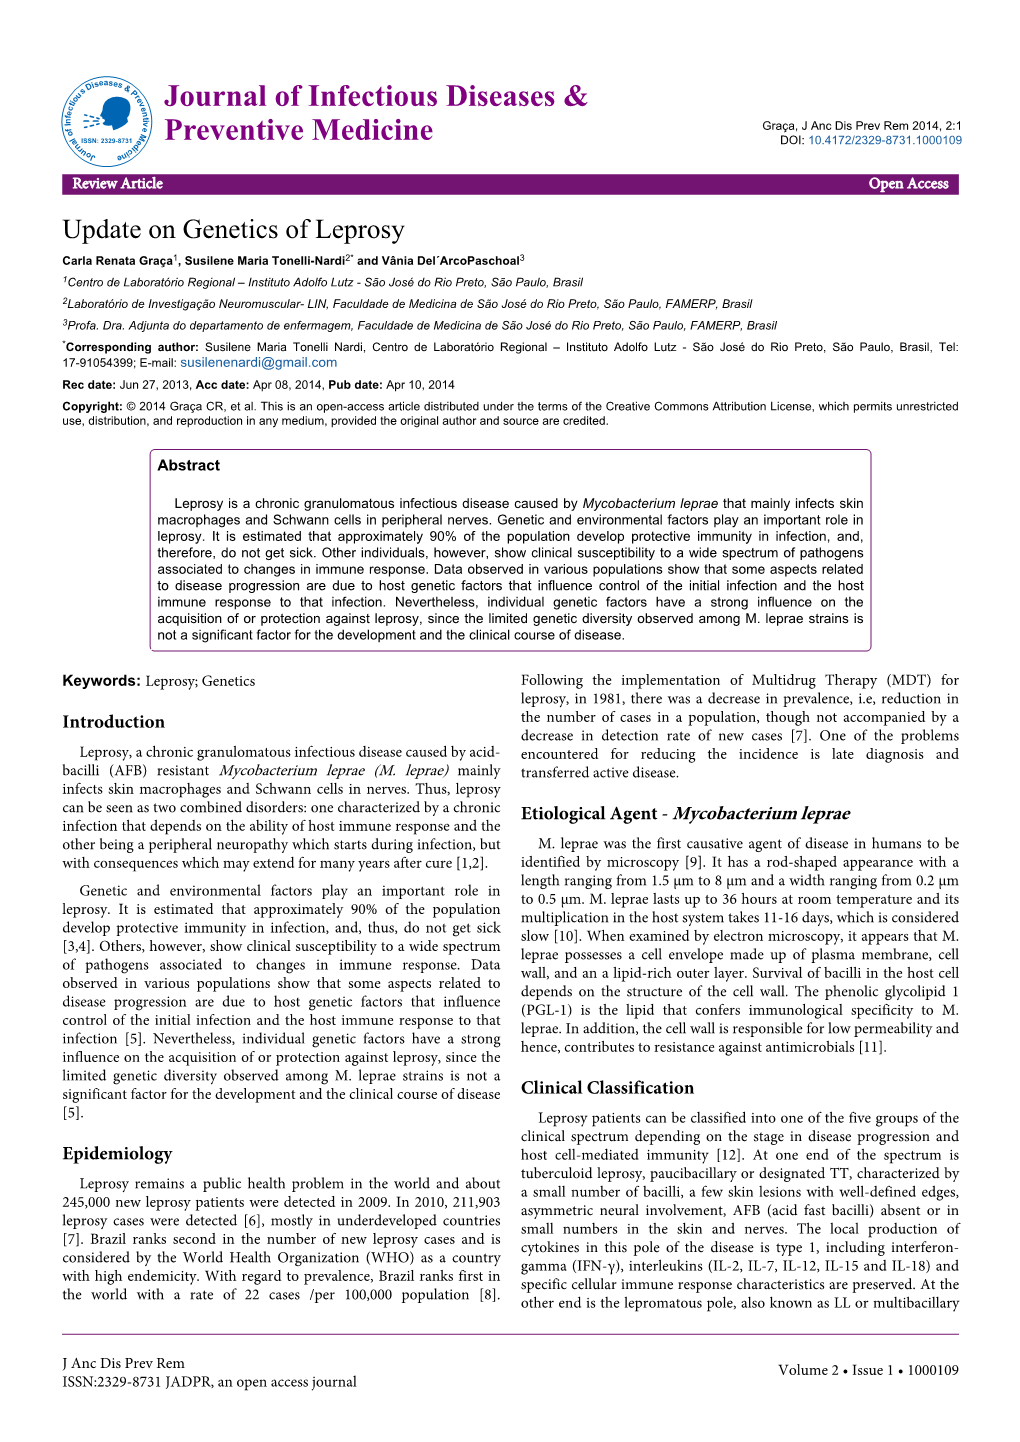 Update on Genetics of Leprosy